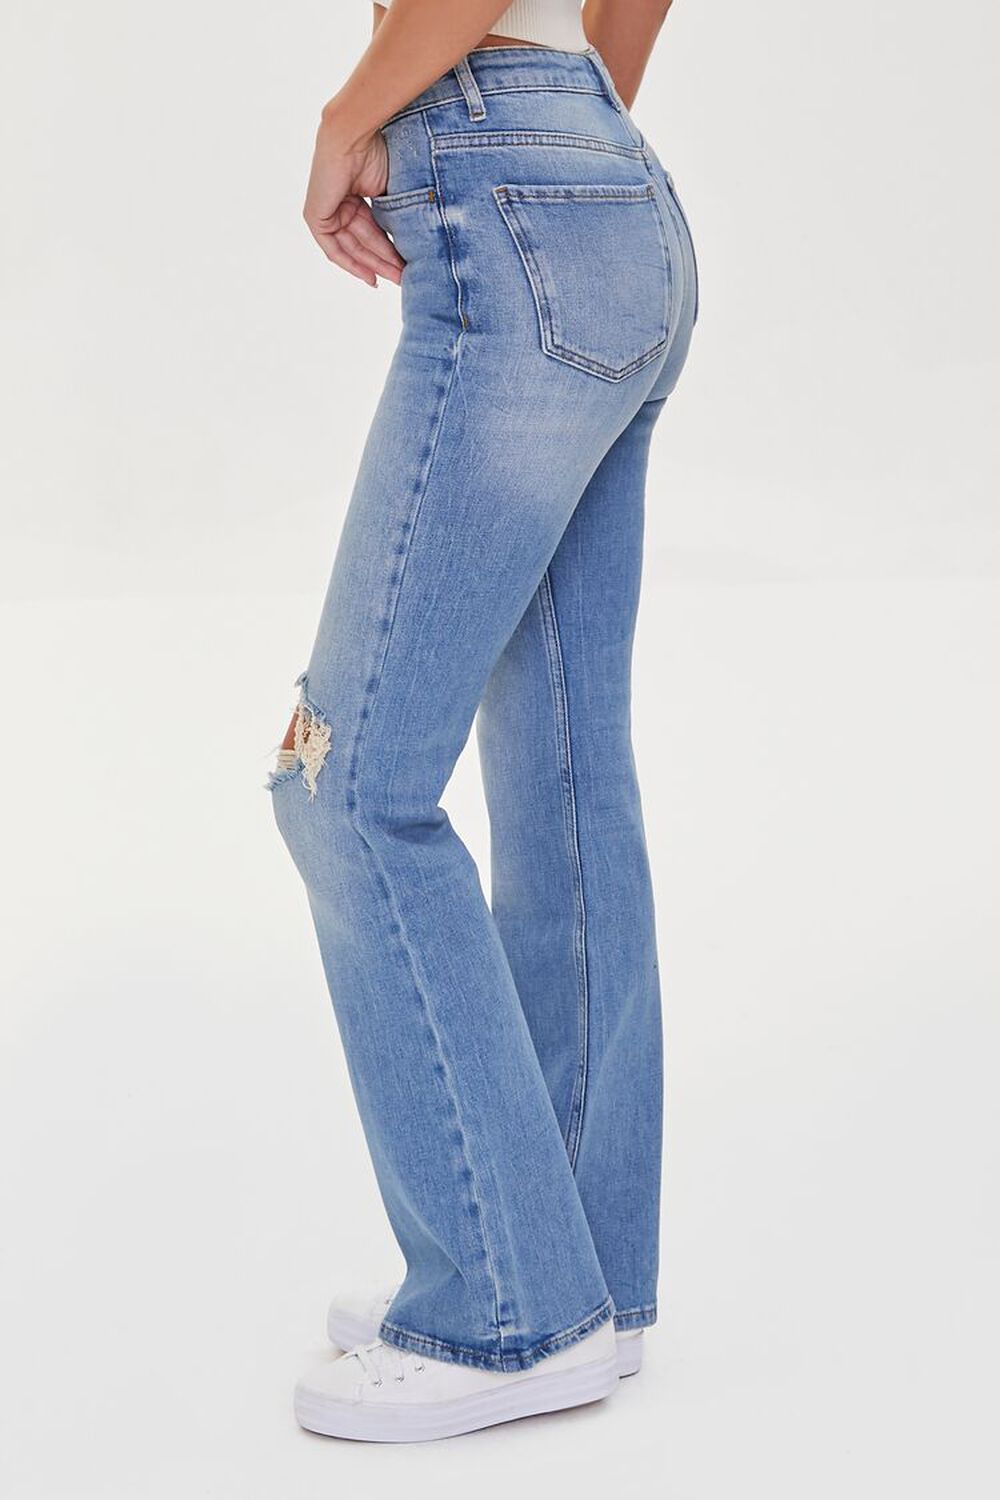 Hemp 4% High-Rise Flare Jeans